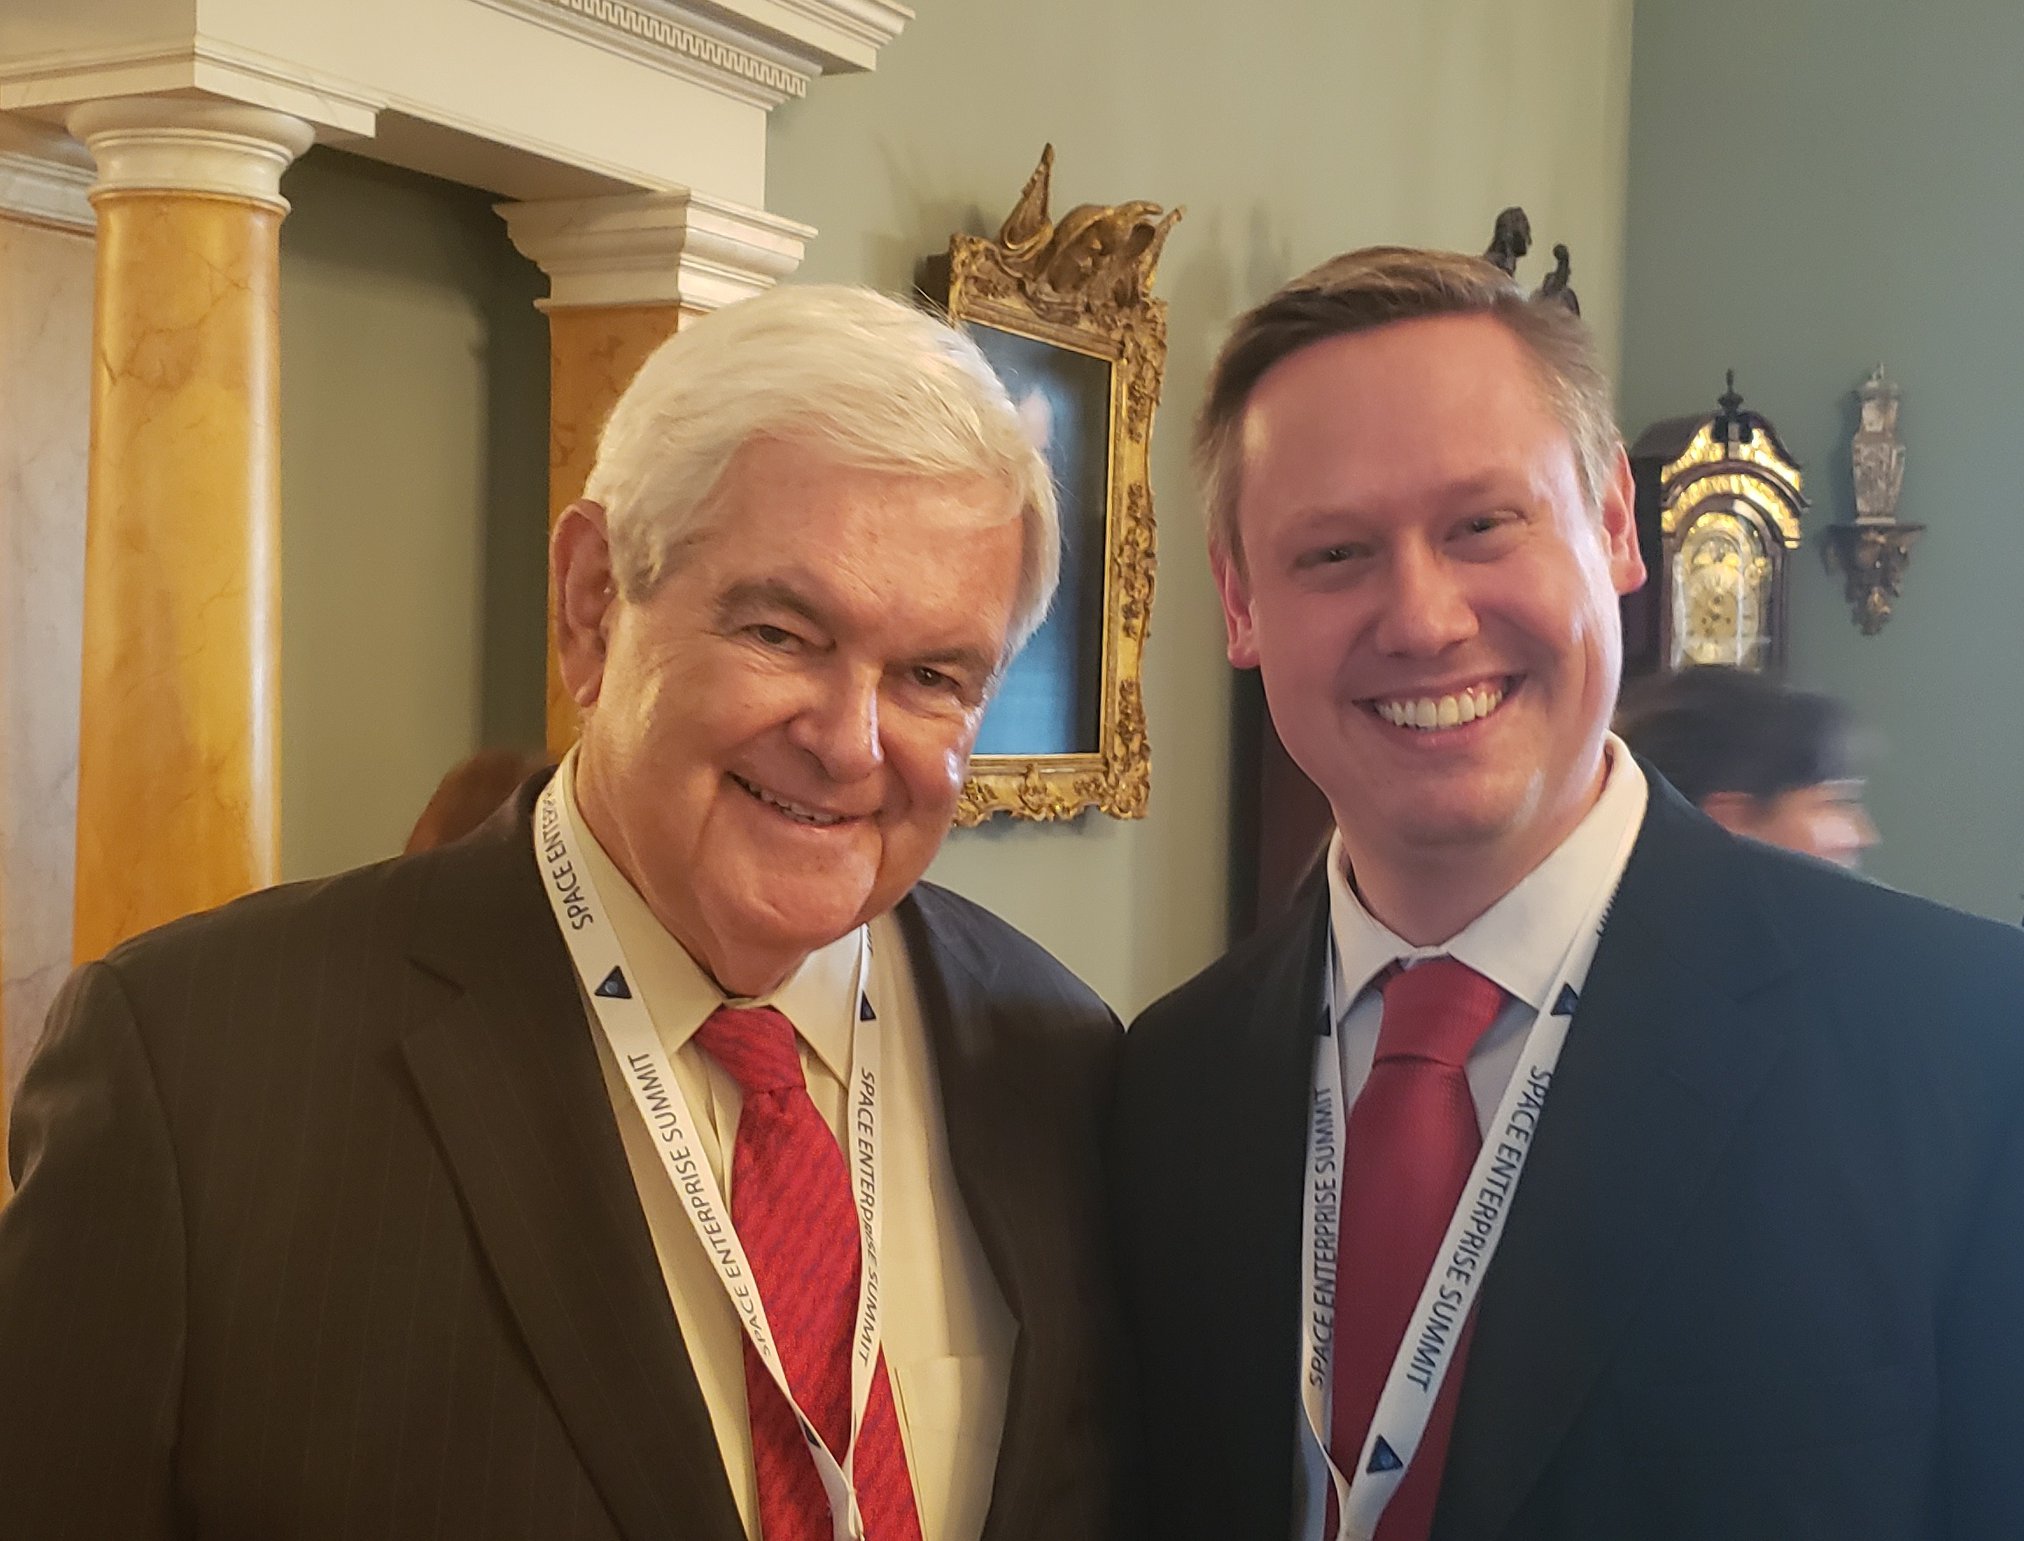 Intergalactic Education's Justin Park meets Newt Gingrich at Space Enterprise Summit